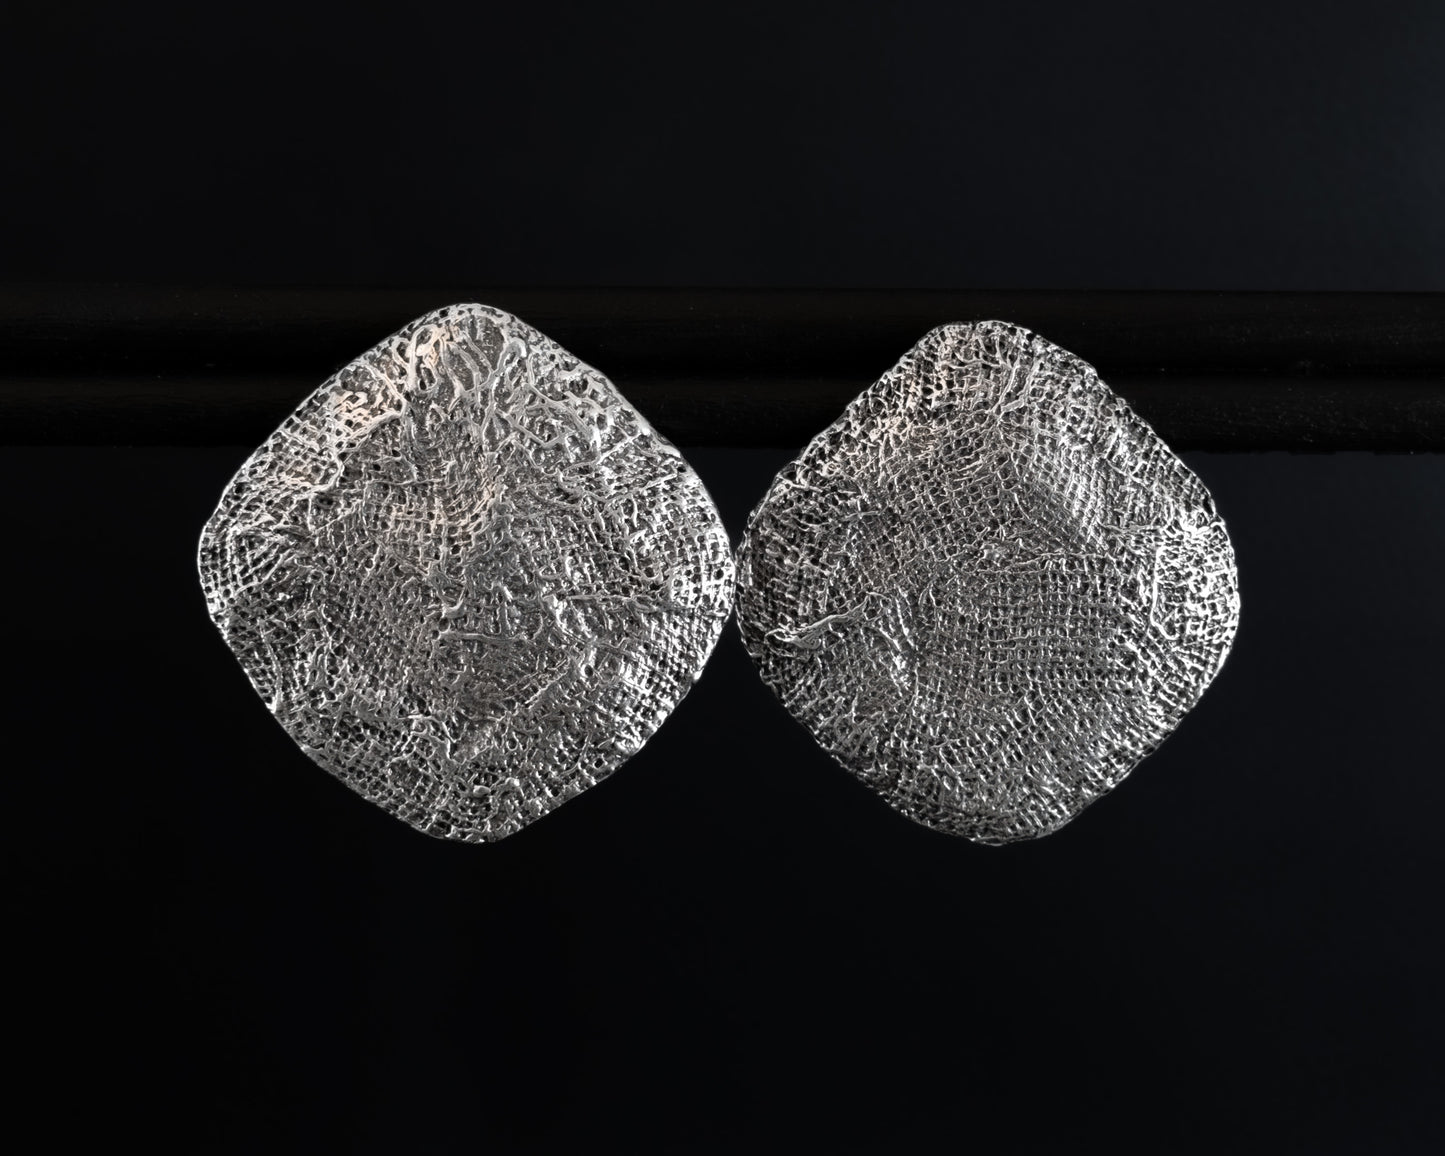 EKRJ153_Fabric Texture One-of-a kind Handmade Unique  Bold Silver Earrings